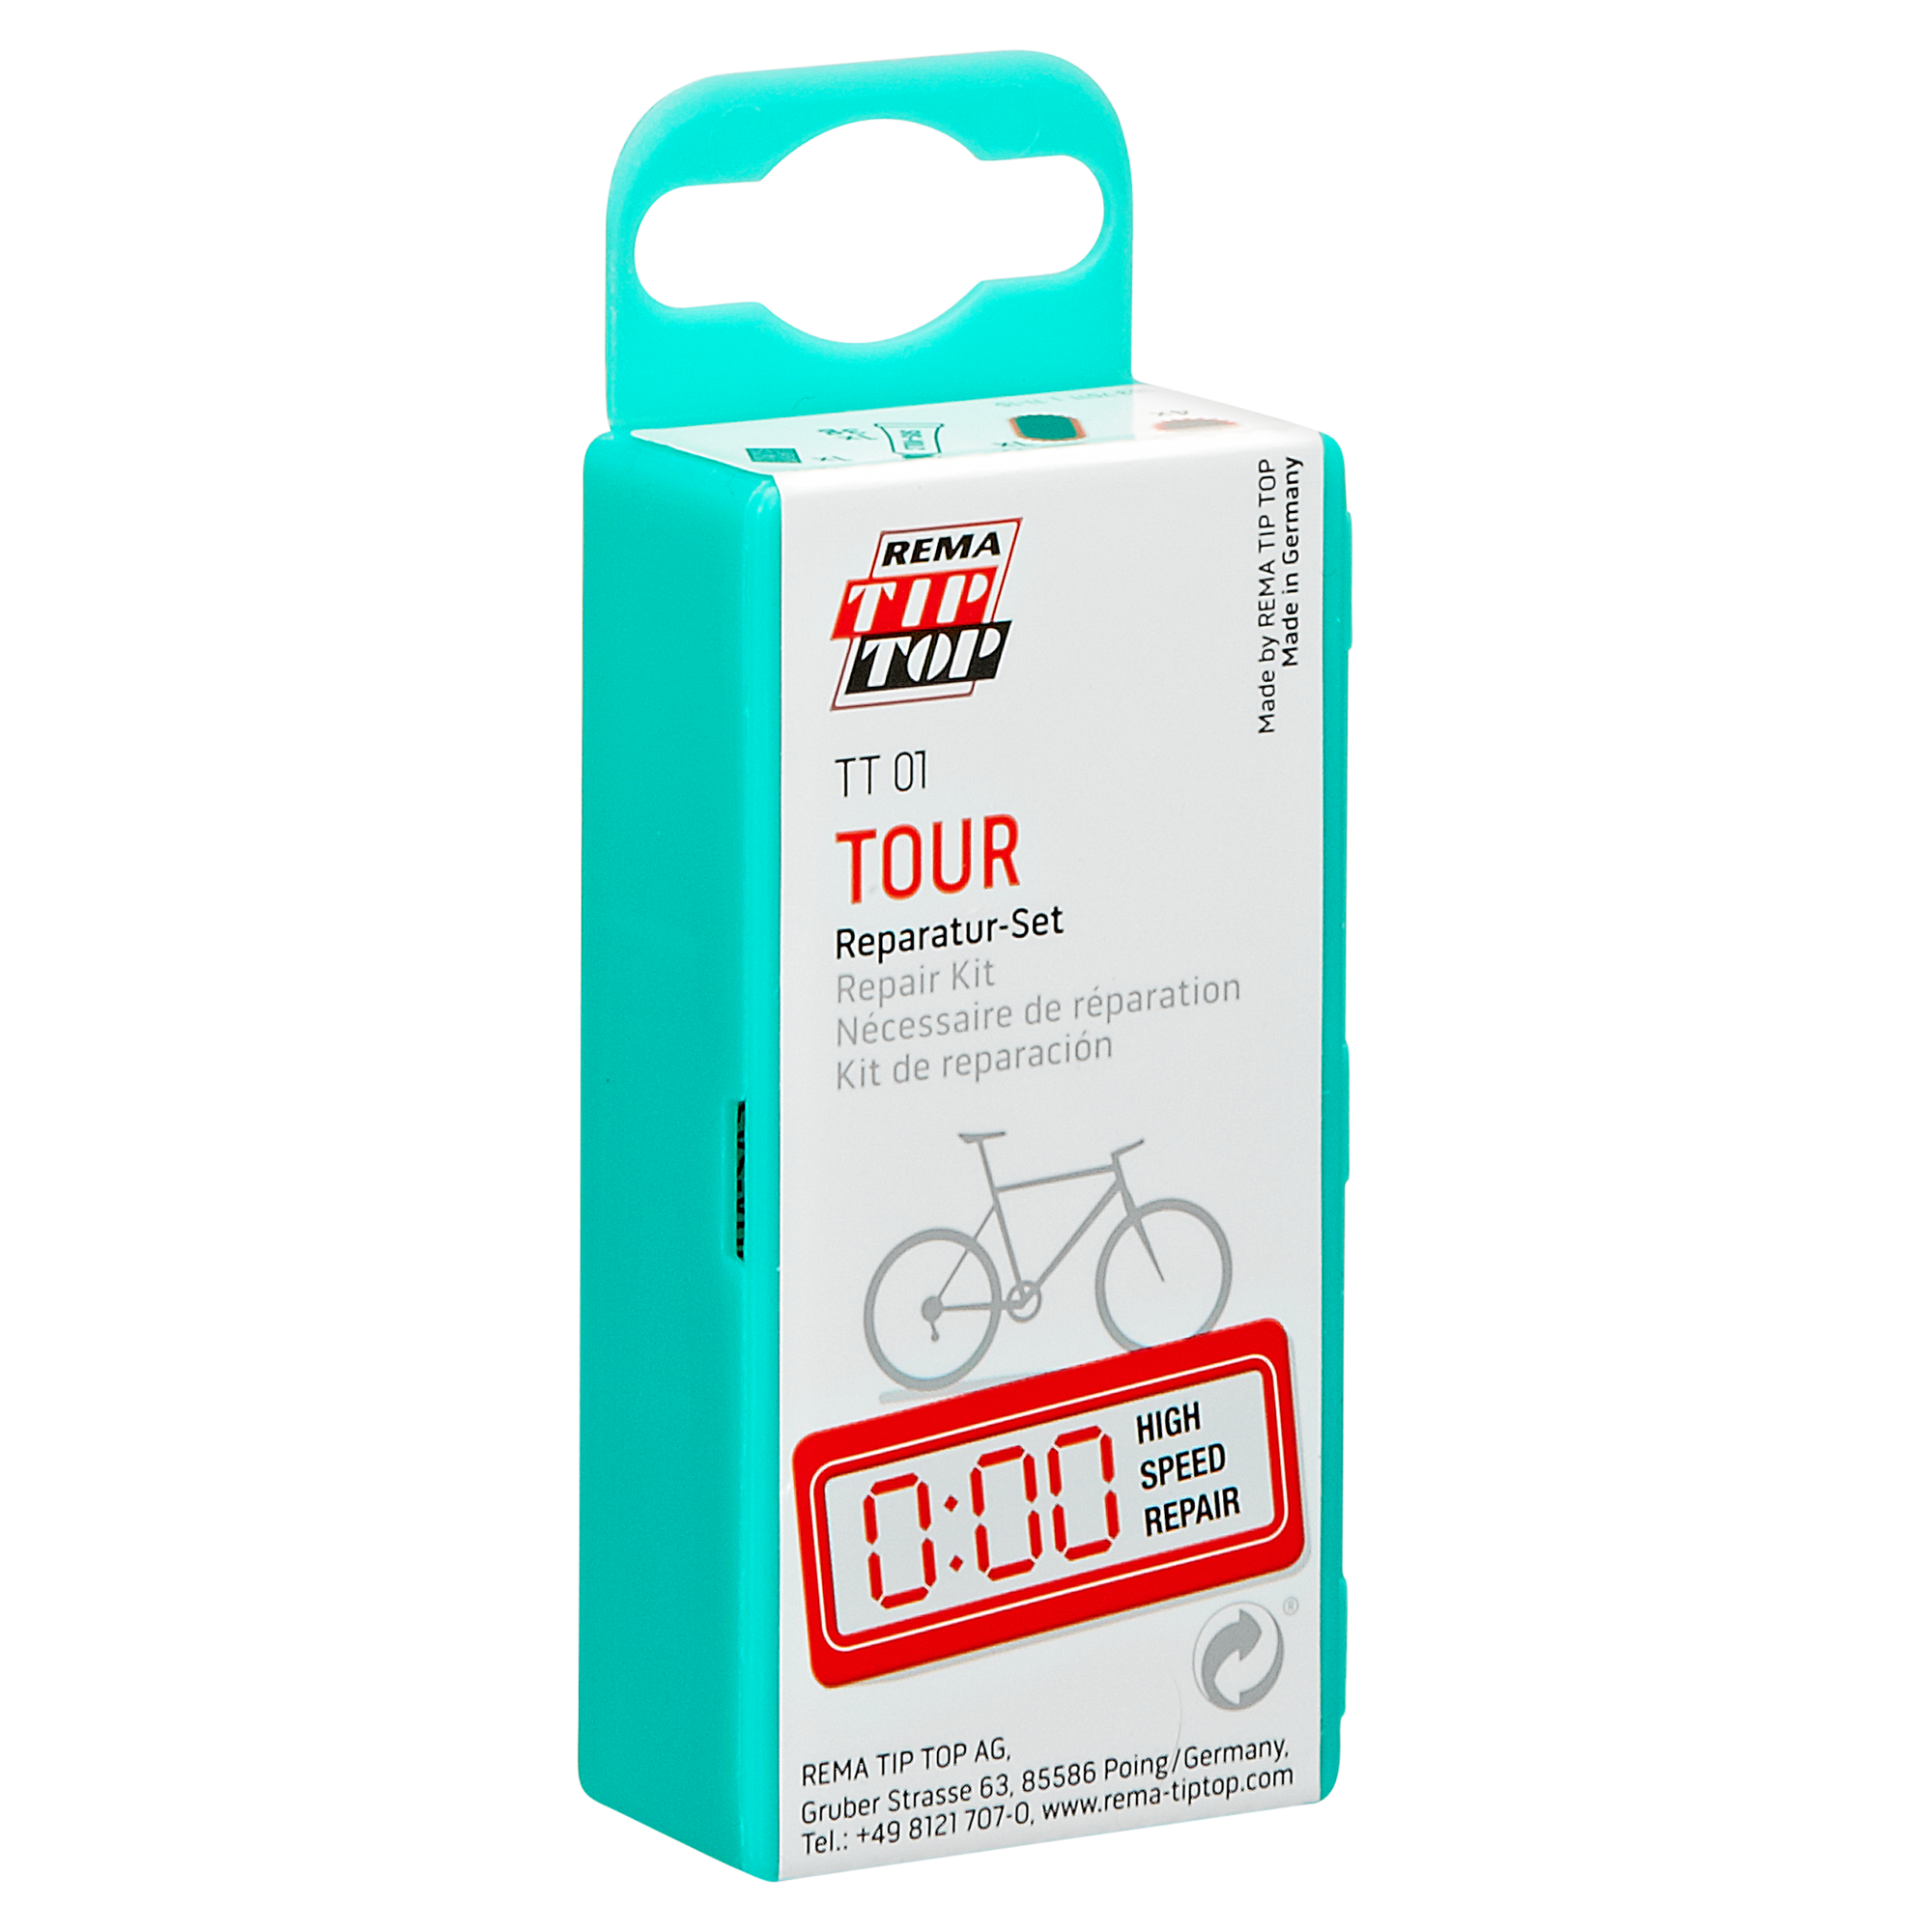 Tip Top Fahrradflickzeug 01 7-teilig + product picture